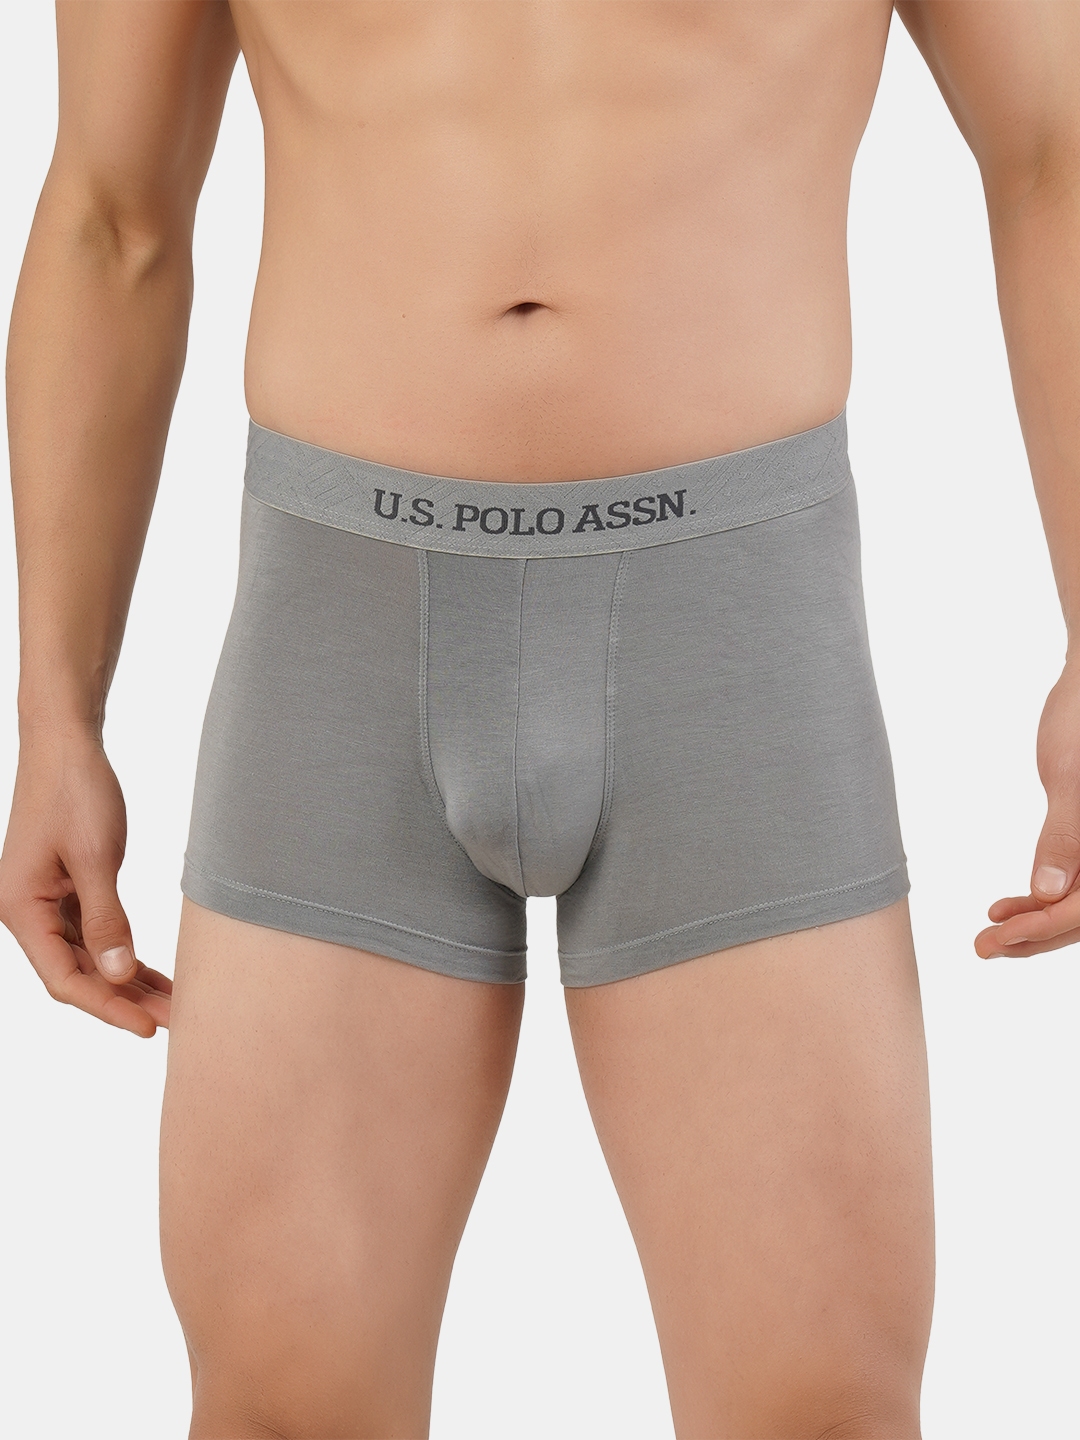 Buy U.S. POLO ASSN. Men Assorted I014 Mid Rise Branded Waist Trunks  Multi-Color (Pack of 2) Online